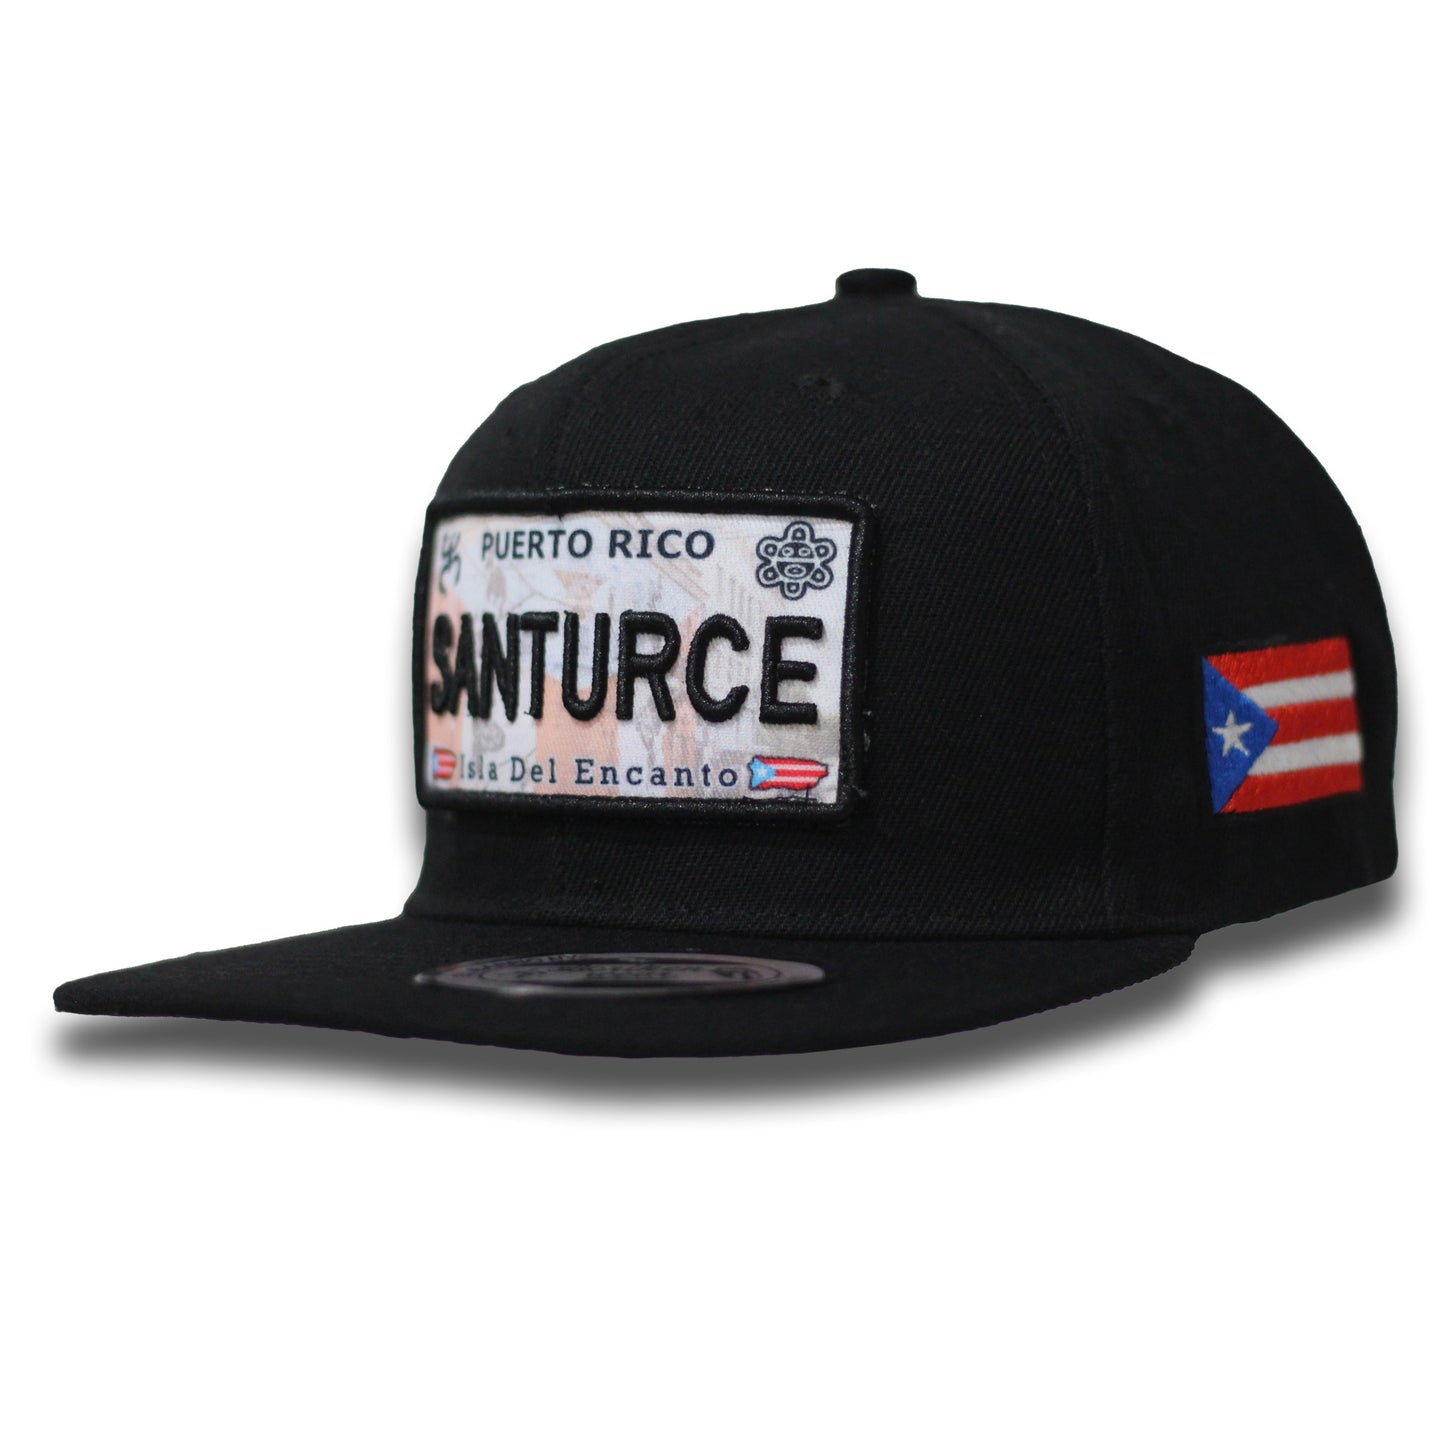 Santurce Hat